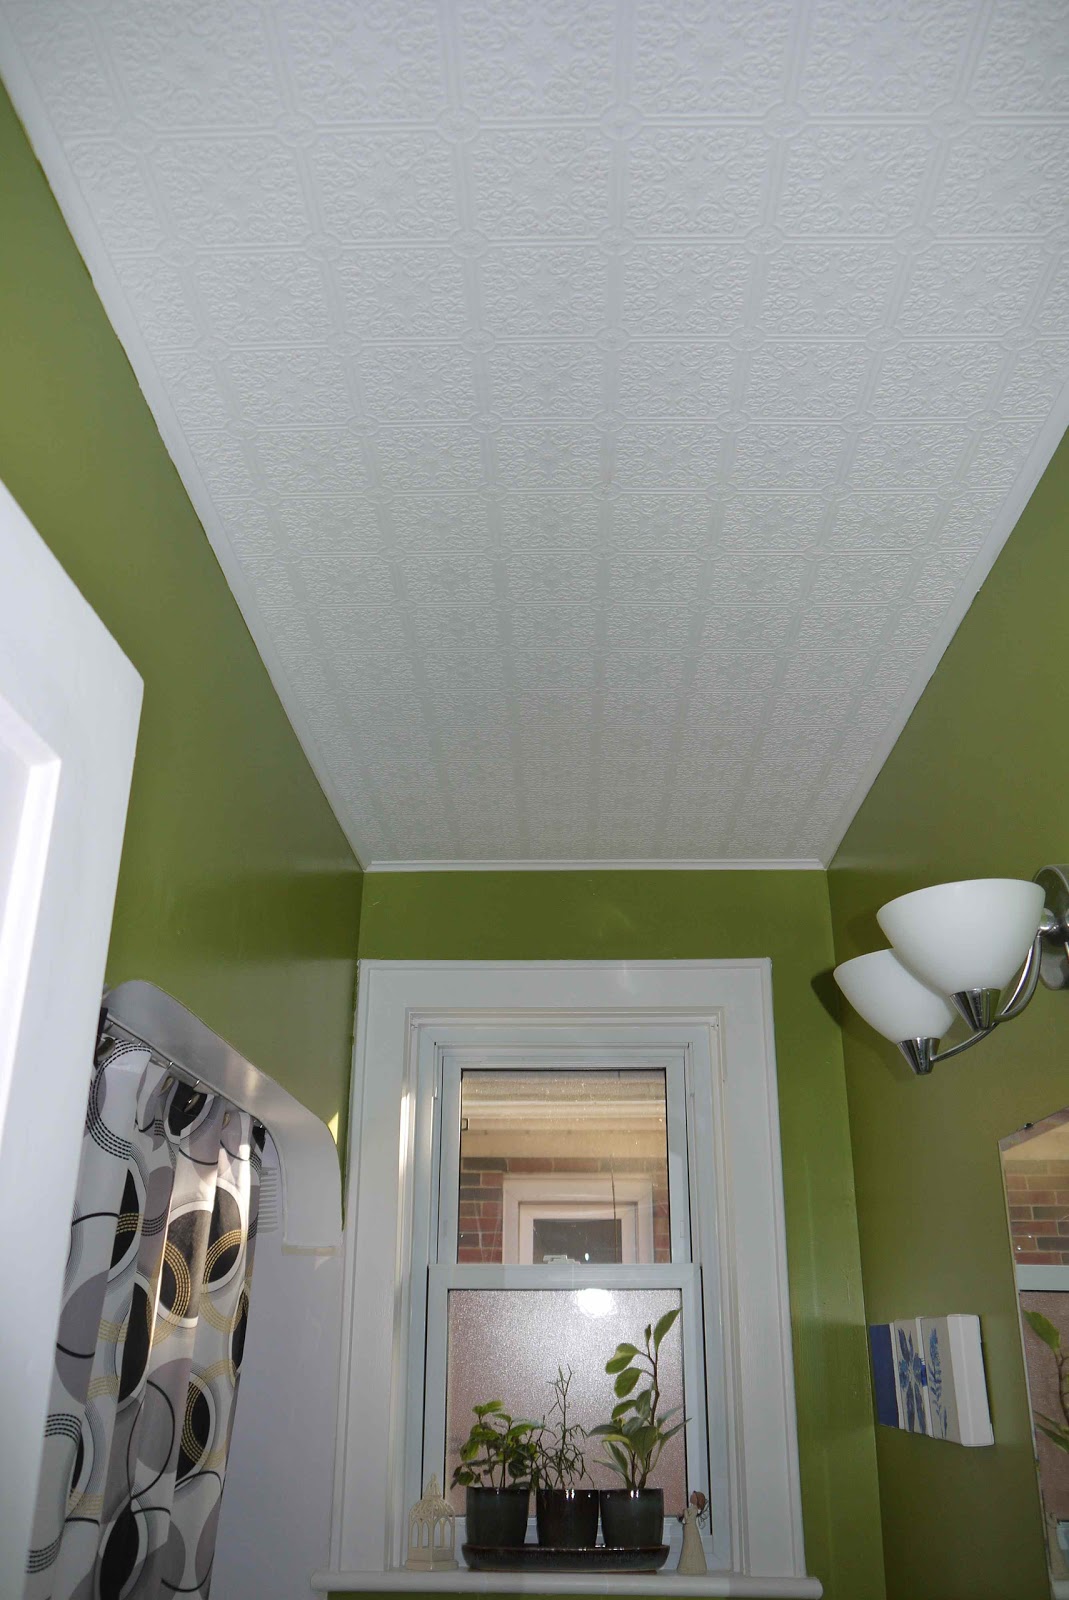 http://2.bp.blogspot.com/-BRGe2Tinrzw/T1diYiWIFqI/AAAAAAAACEU/t5a1Kaq3TAY/s1600/bathroom+tin+tile+wallpaper+ceiling.jpg